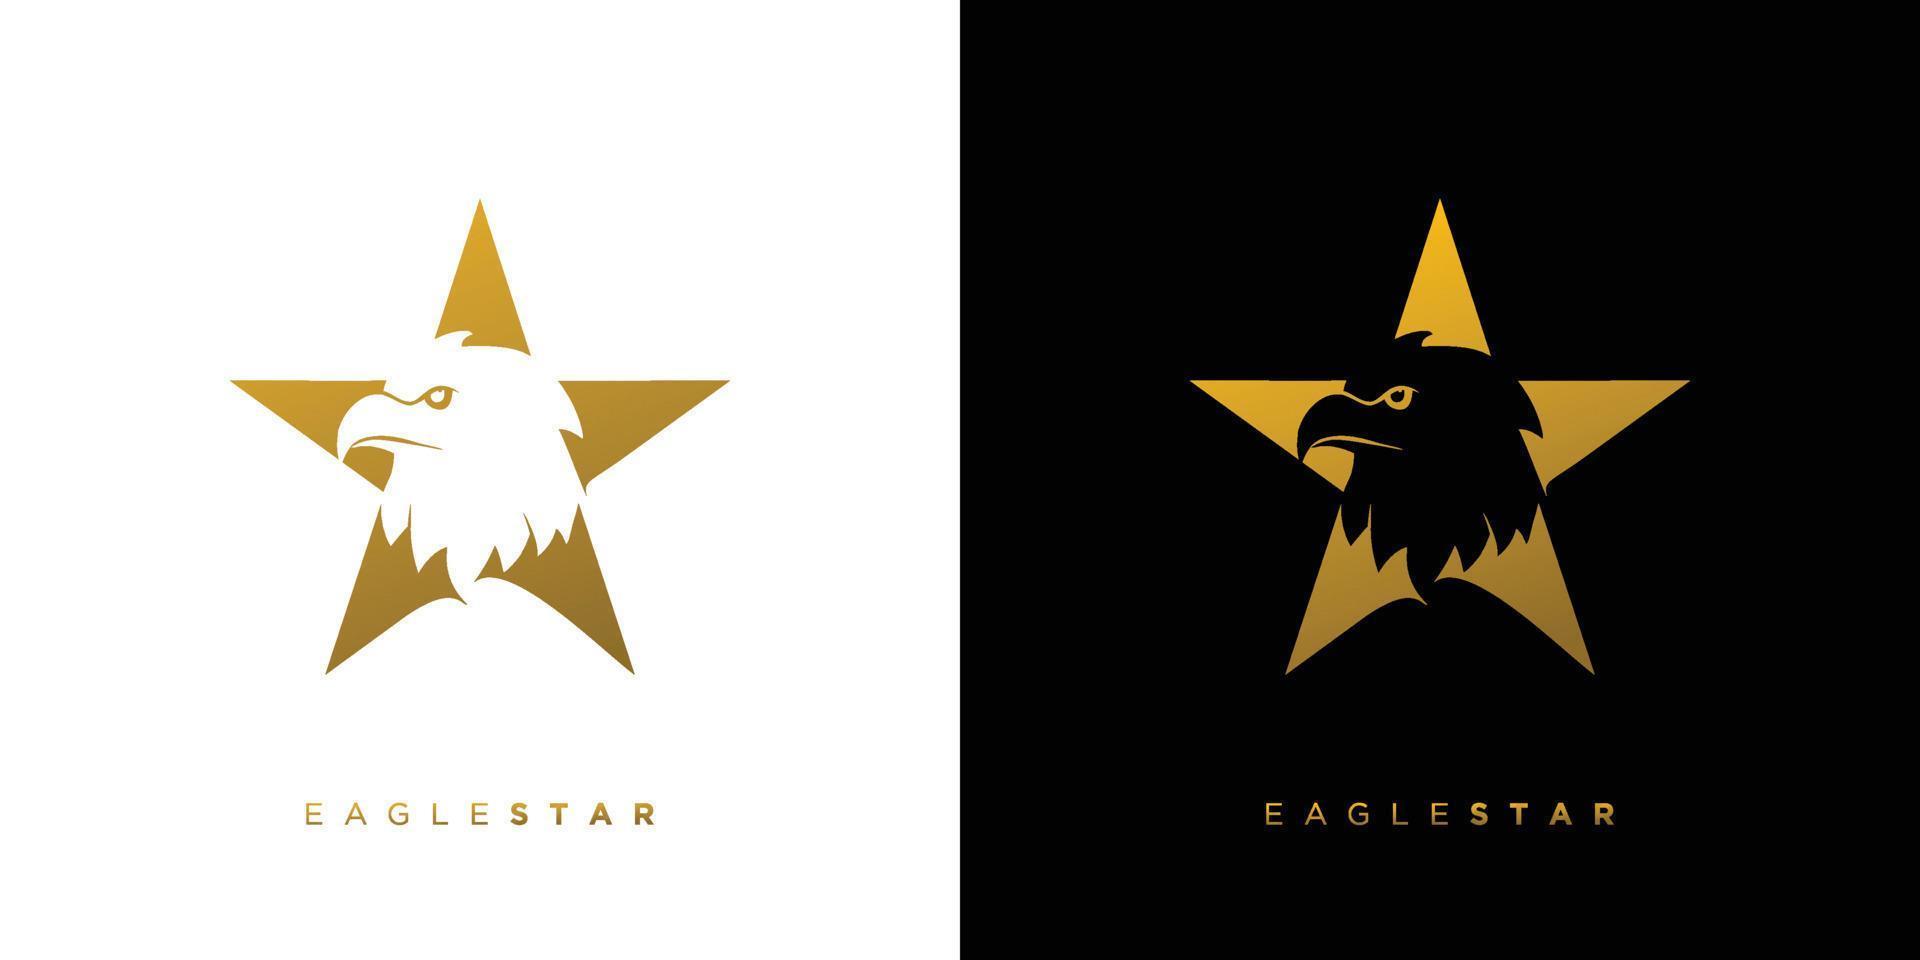 Elegant and attractive eagle star logo design vector